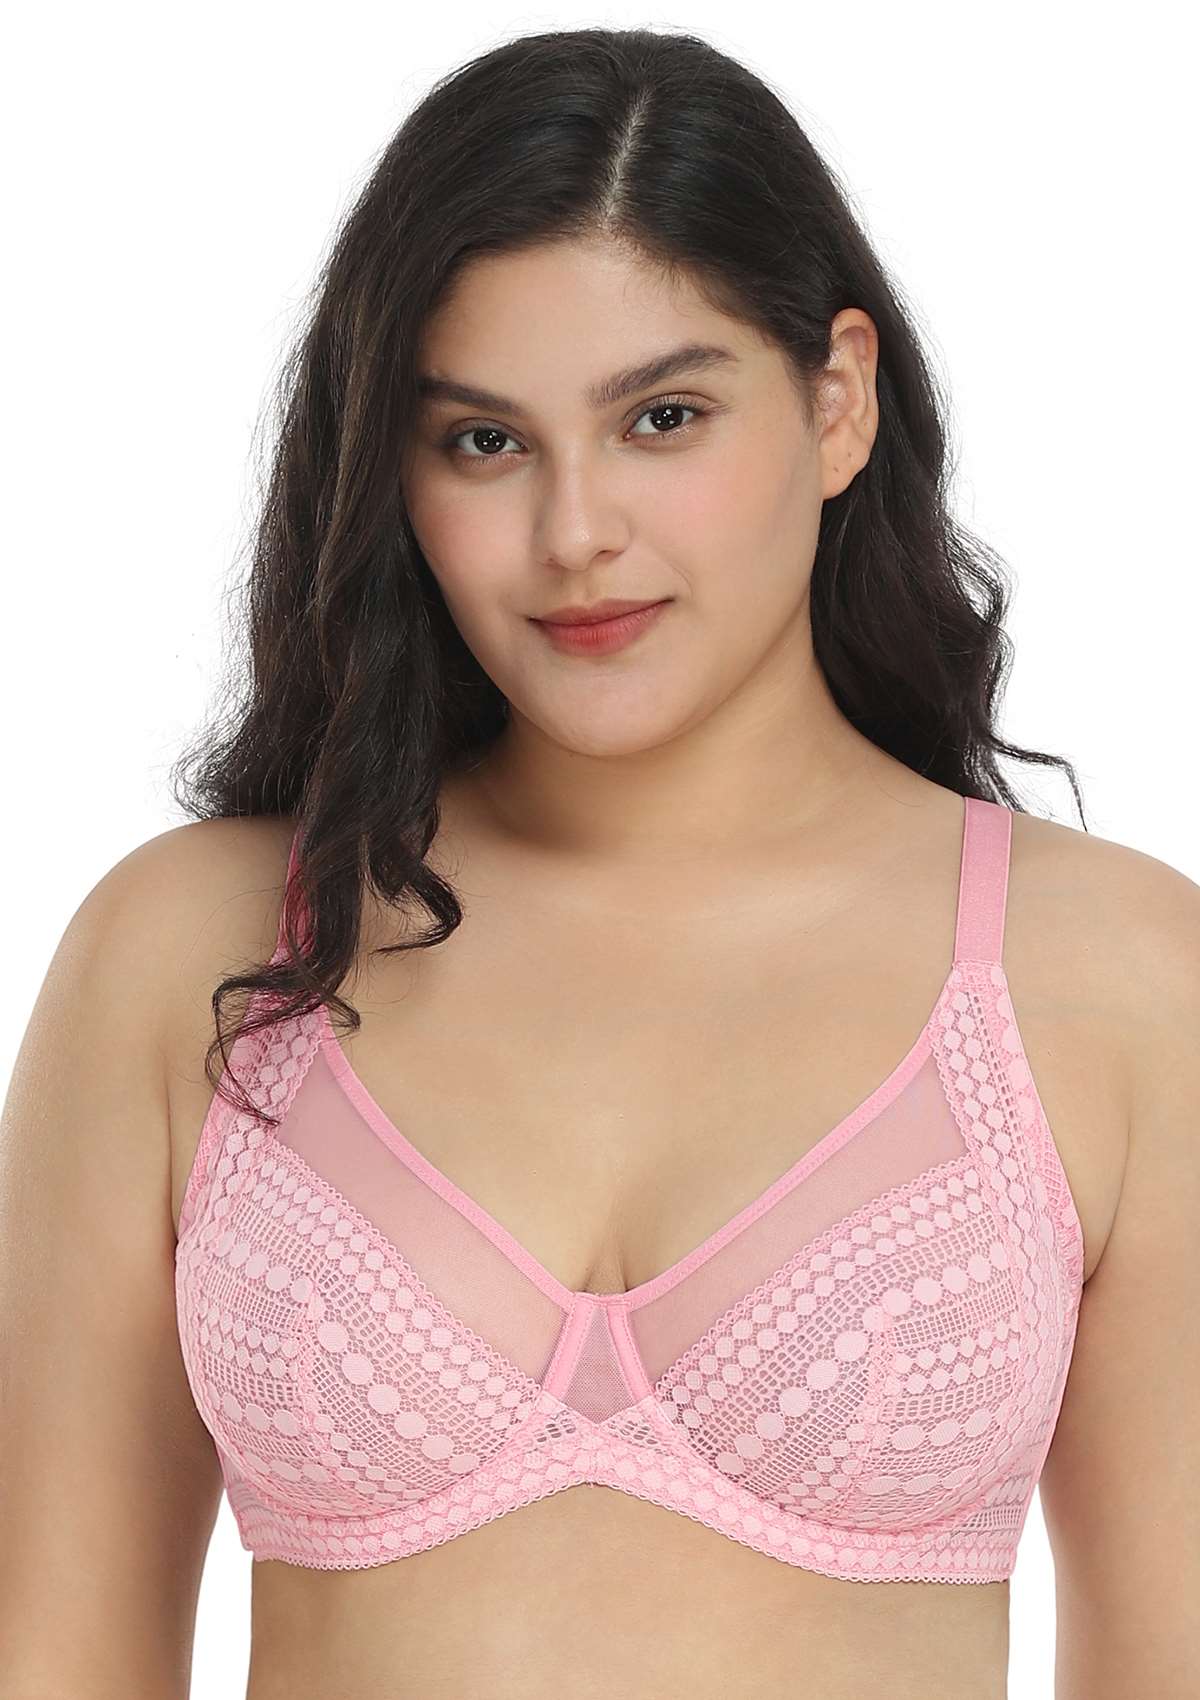 HSIA Heroine Lace Unlined Bra: Bra That Hides Back Fat - Plus Size - Pink / 40 / C